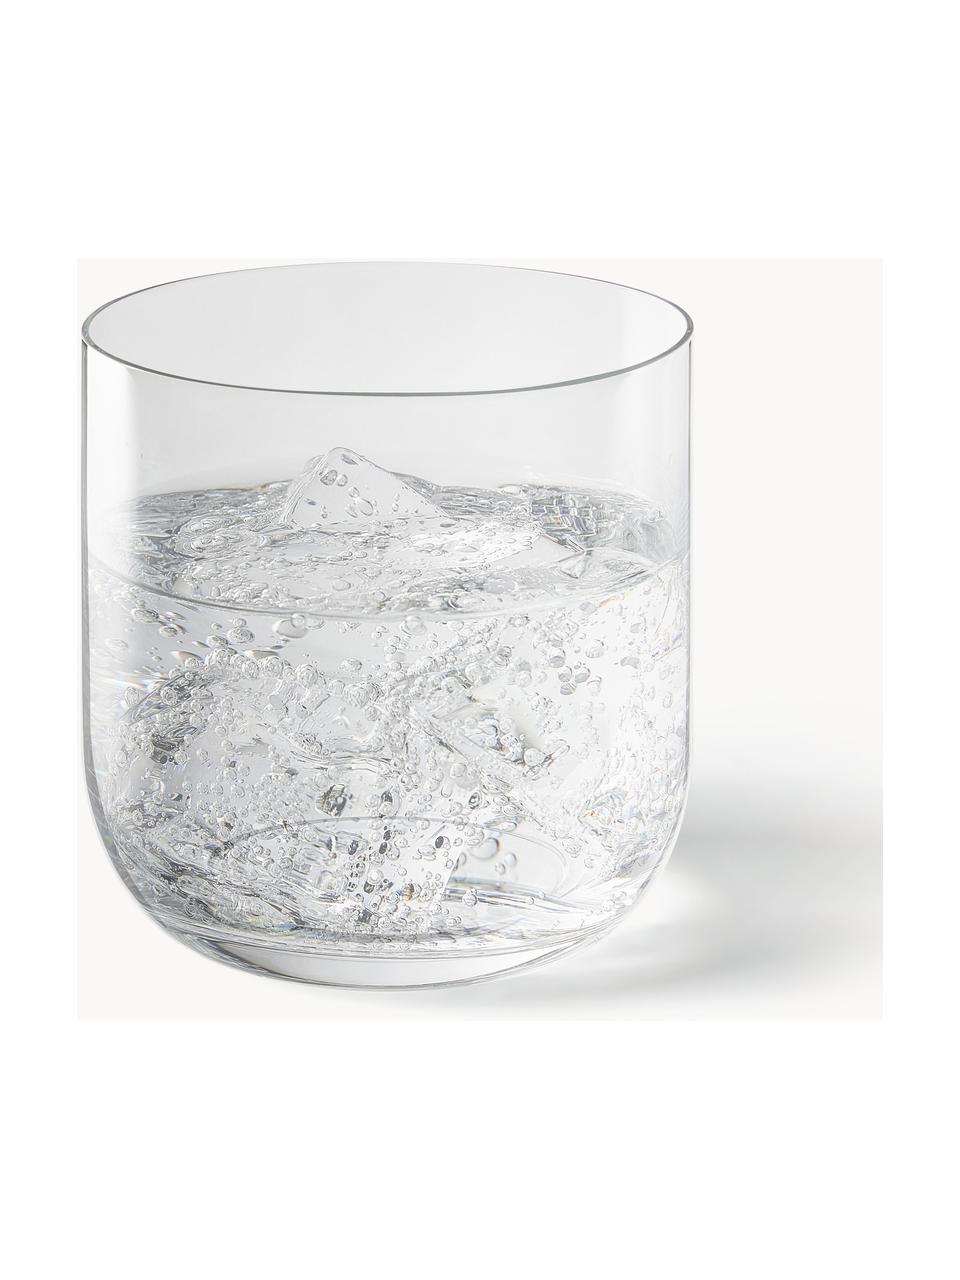 Waterglazen Eleia, 4 stuks, Crystal glas/kristalglas, Transparant, Ø 7 x H 9 cm, 330 ml